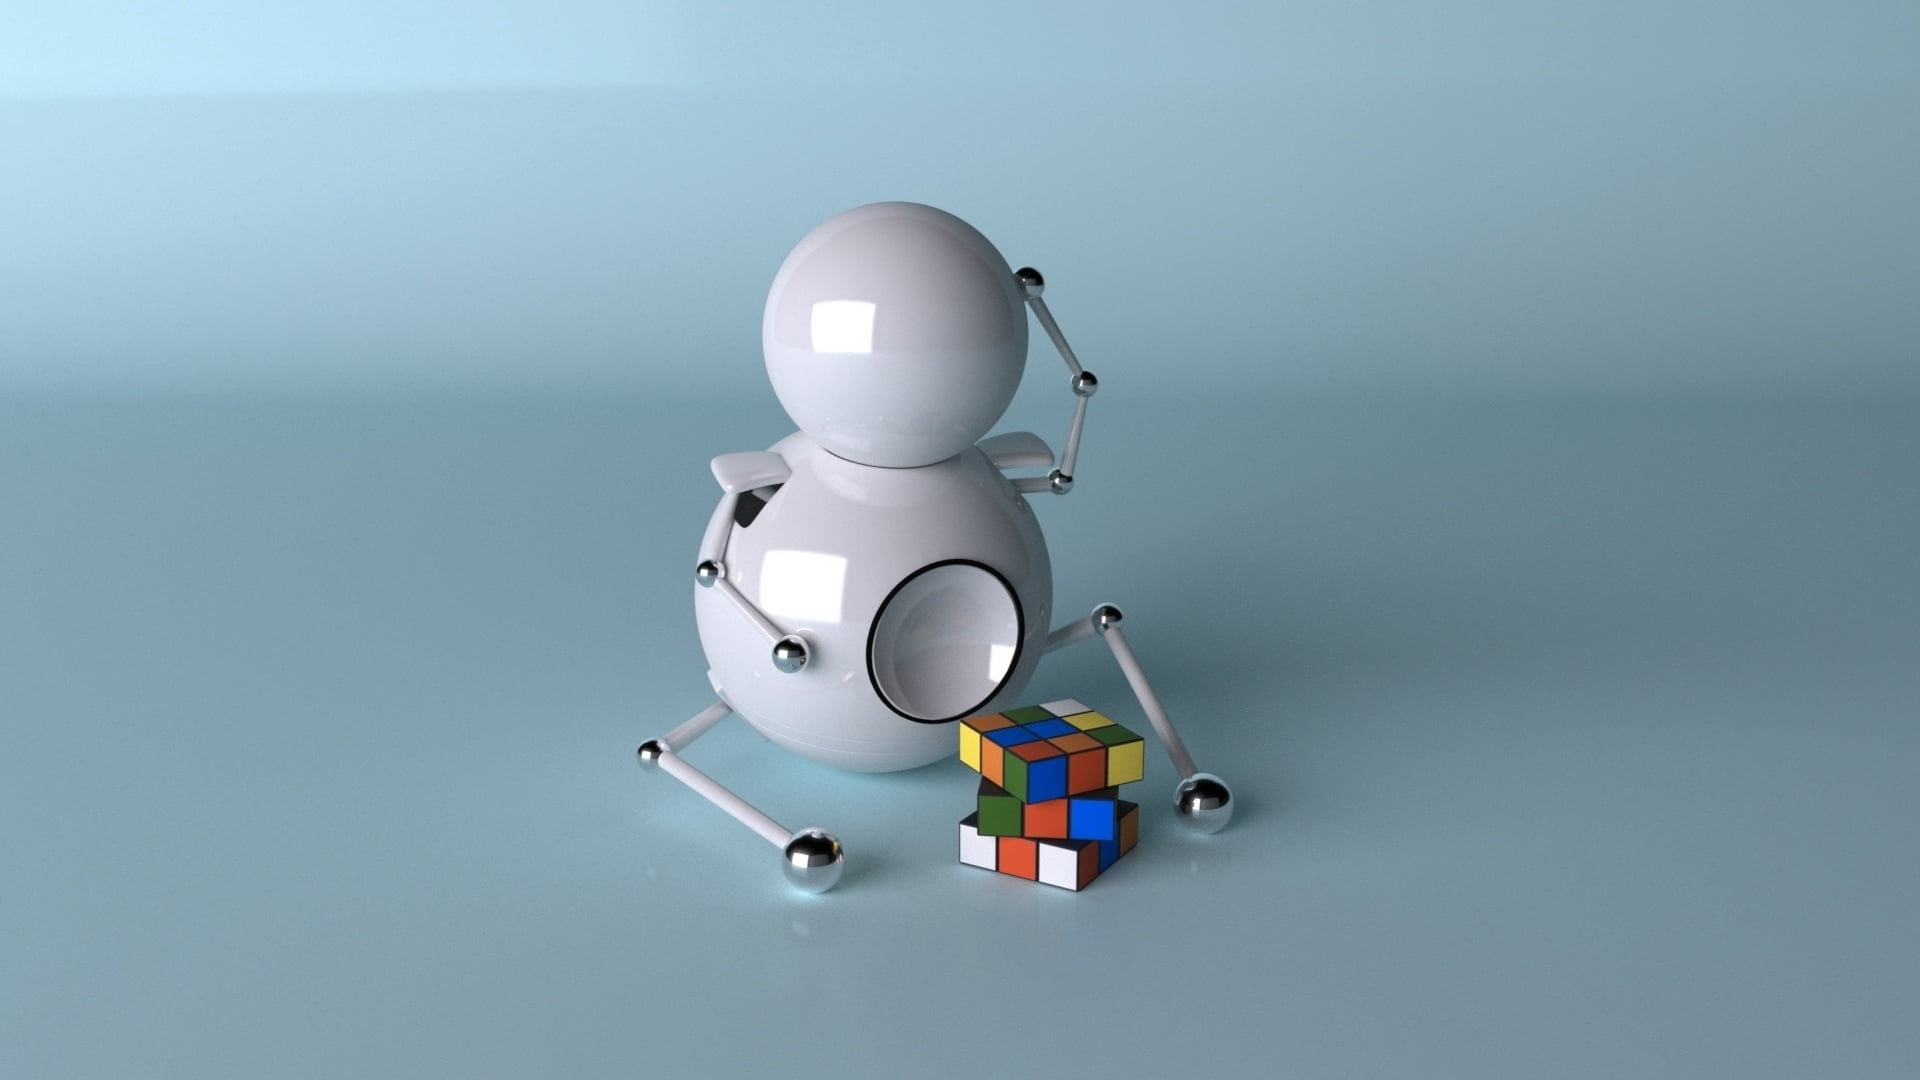 3x3 Rubik's Cube, robots, characters, three-dimensional Shape